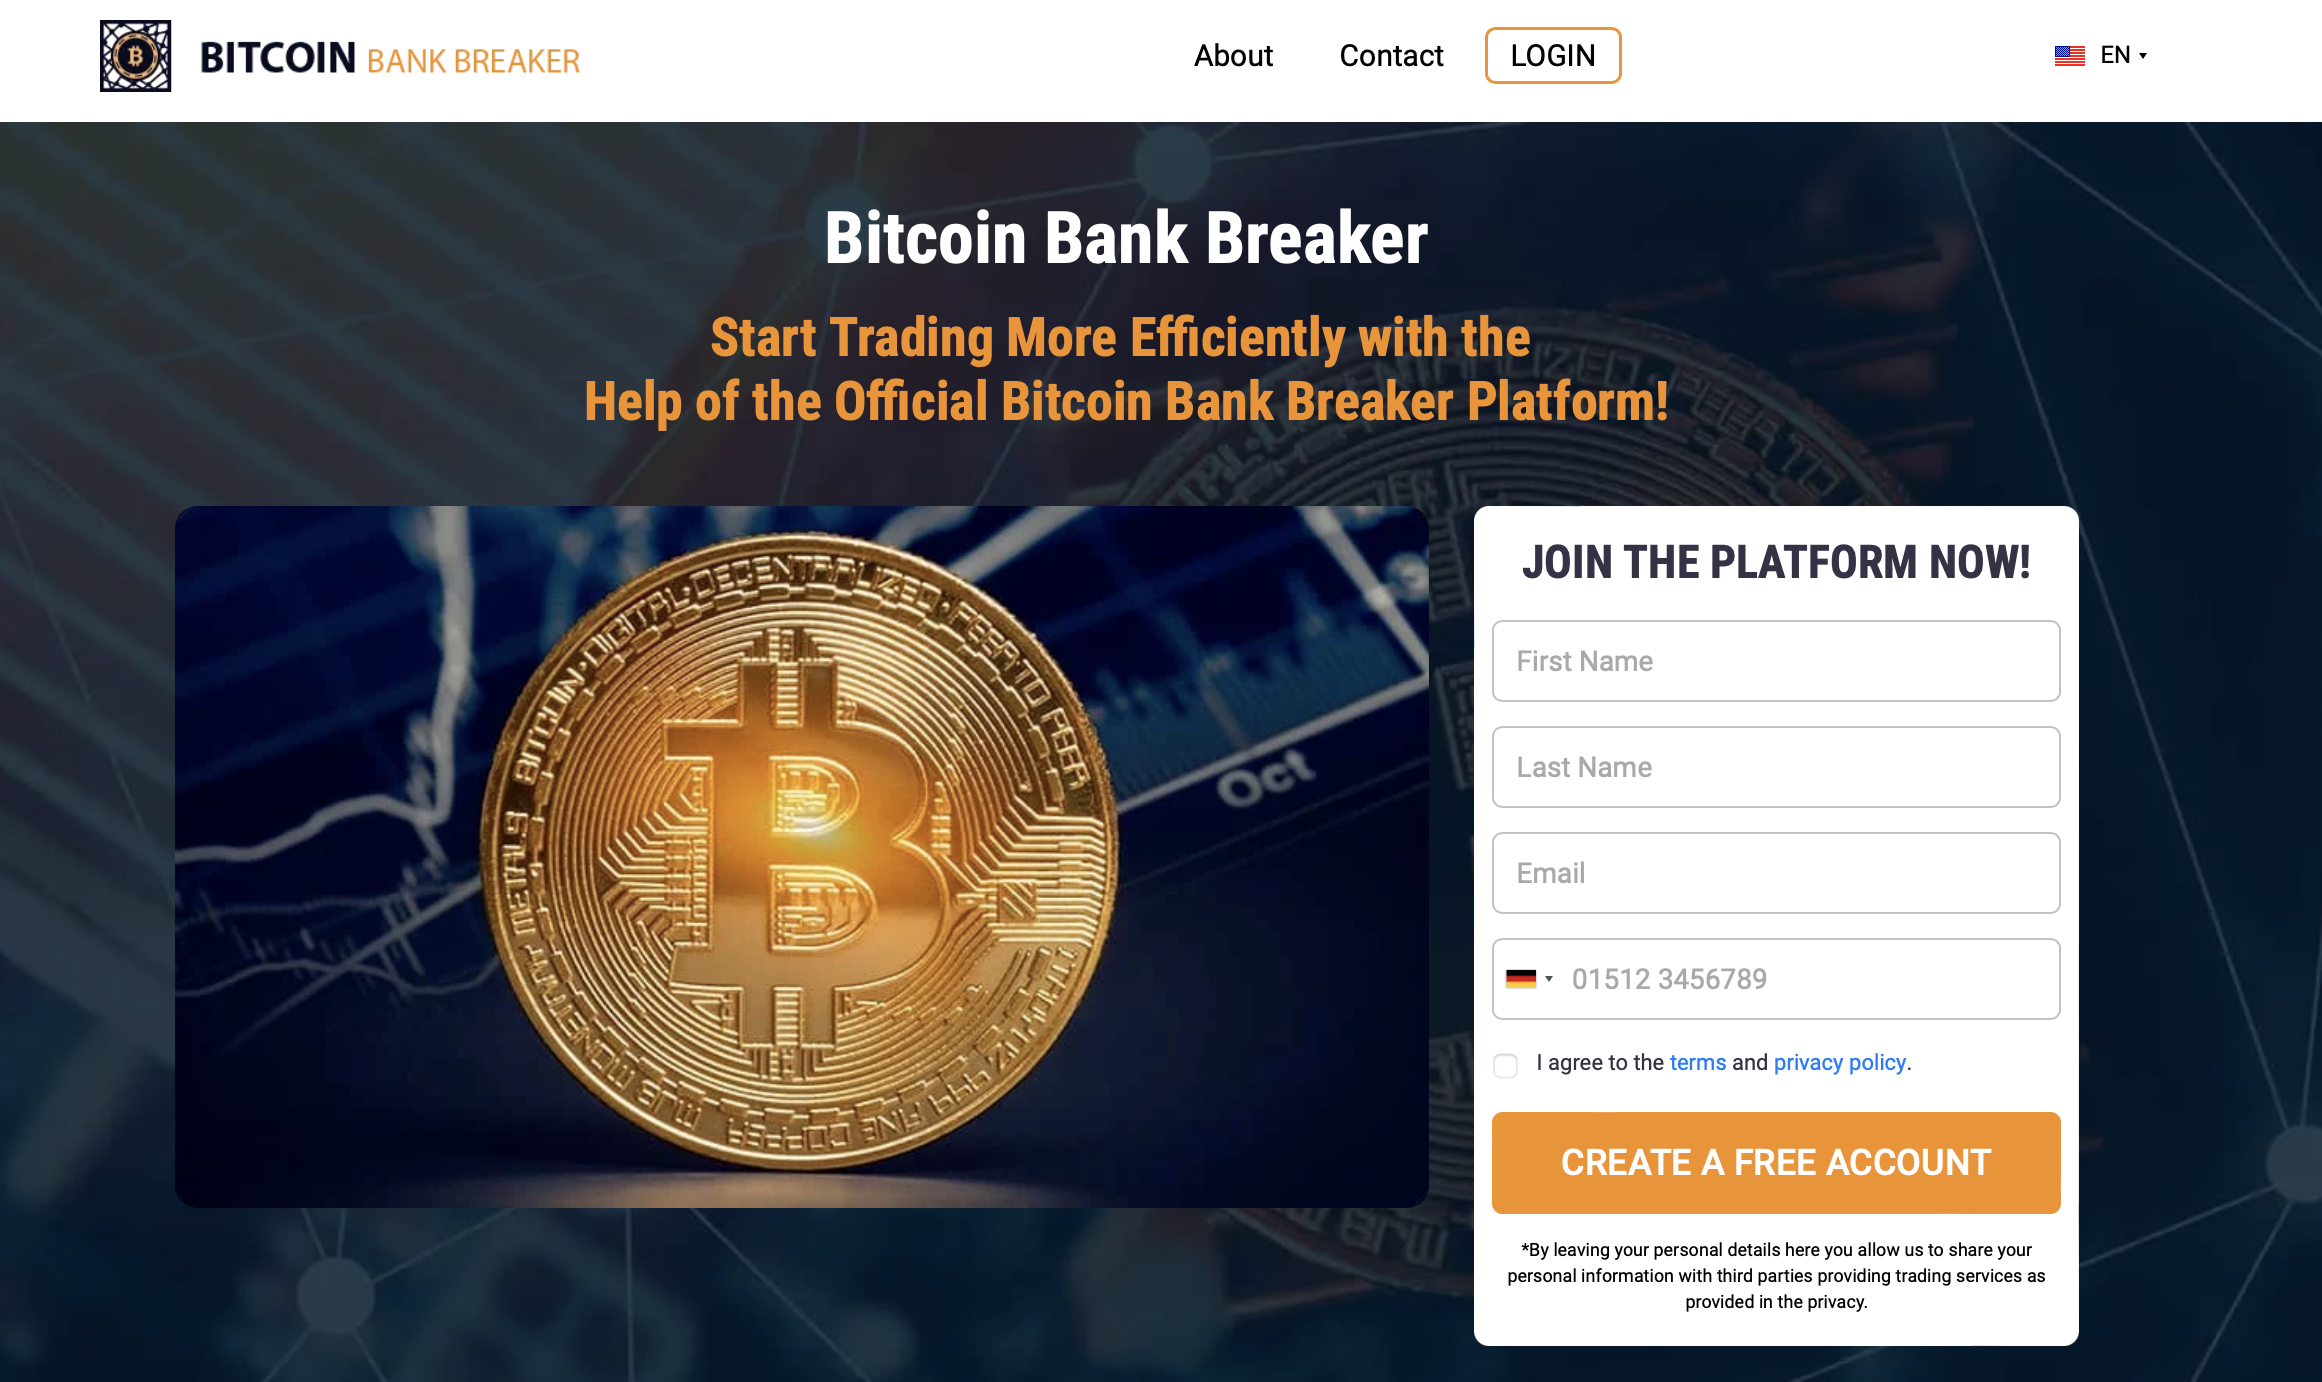 The official website of Bitcoin Bank Breaker